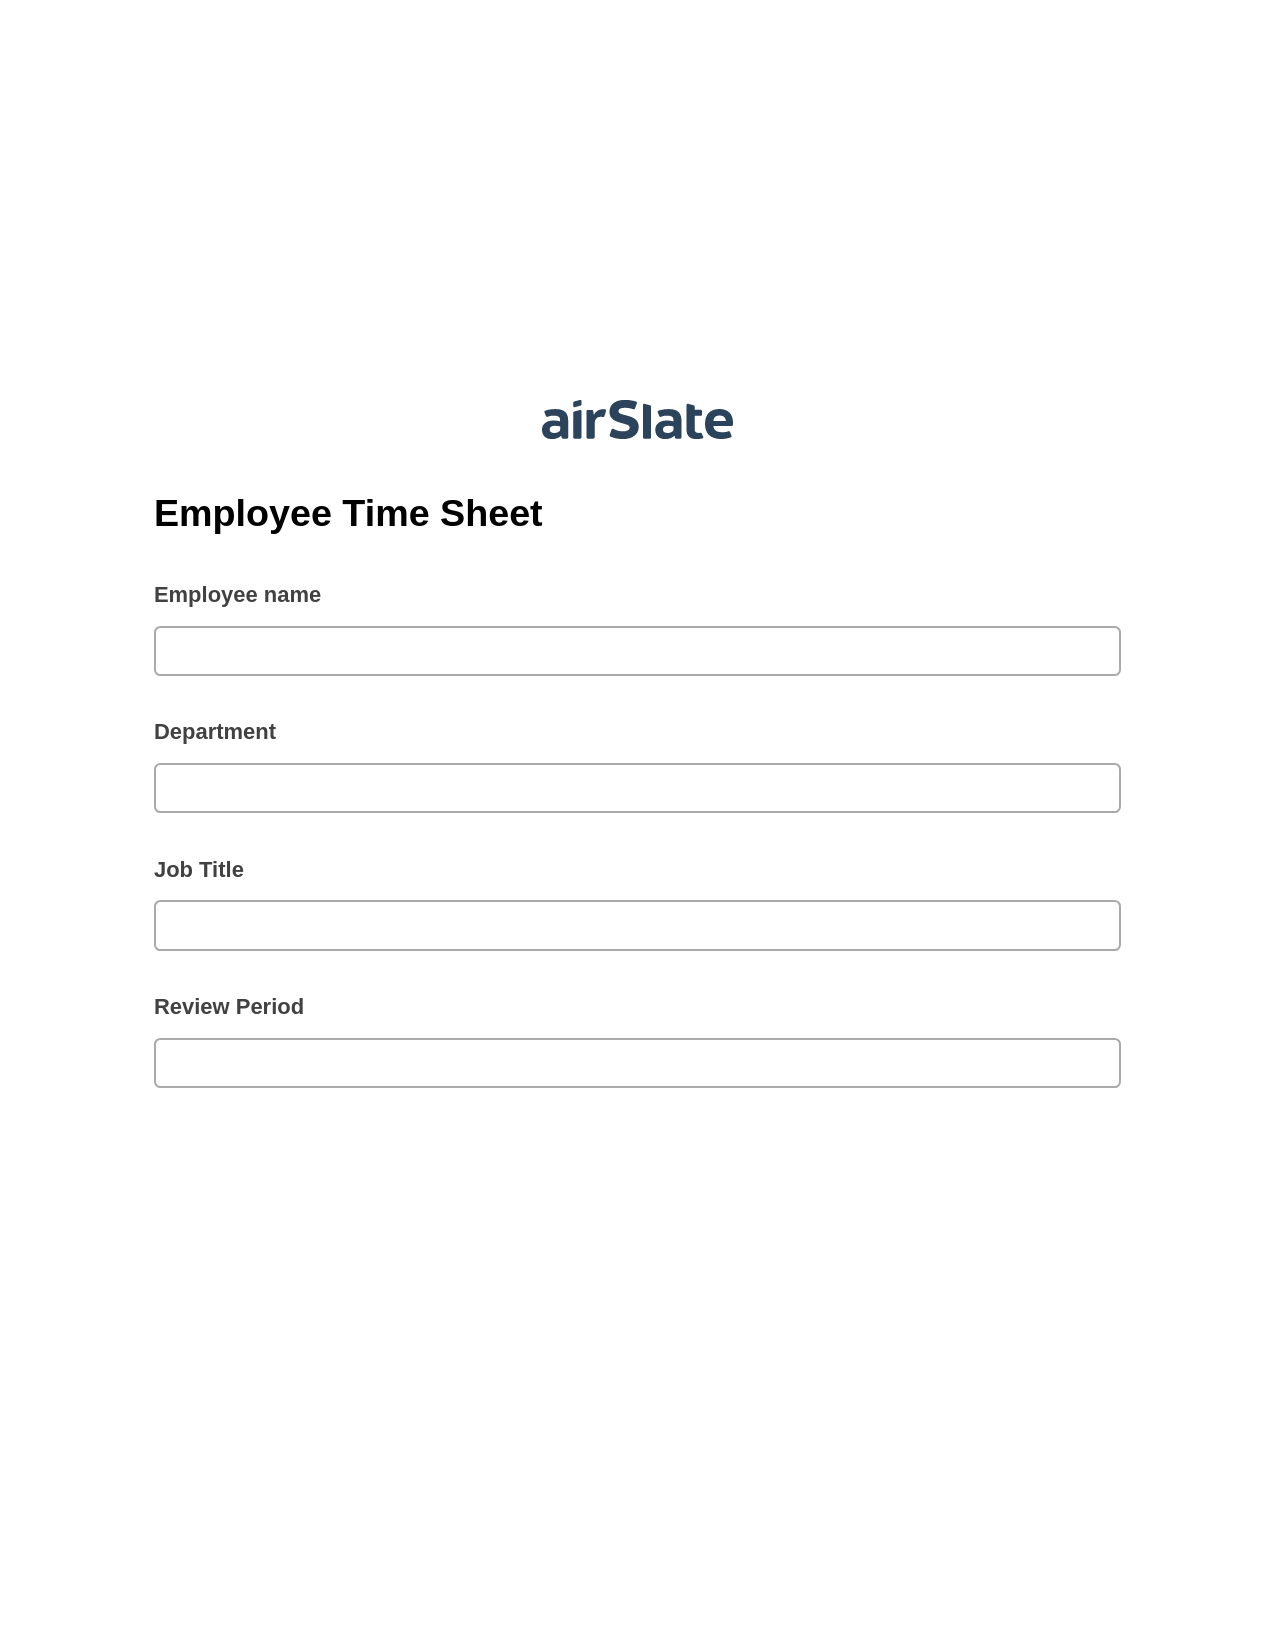 Multirole Employee Time Sheet Prefill from NetSuite records, Create Salesforce Records Bot, Webhook Postfinish Bot